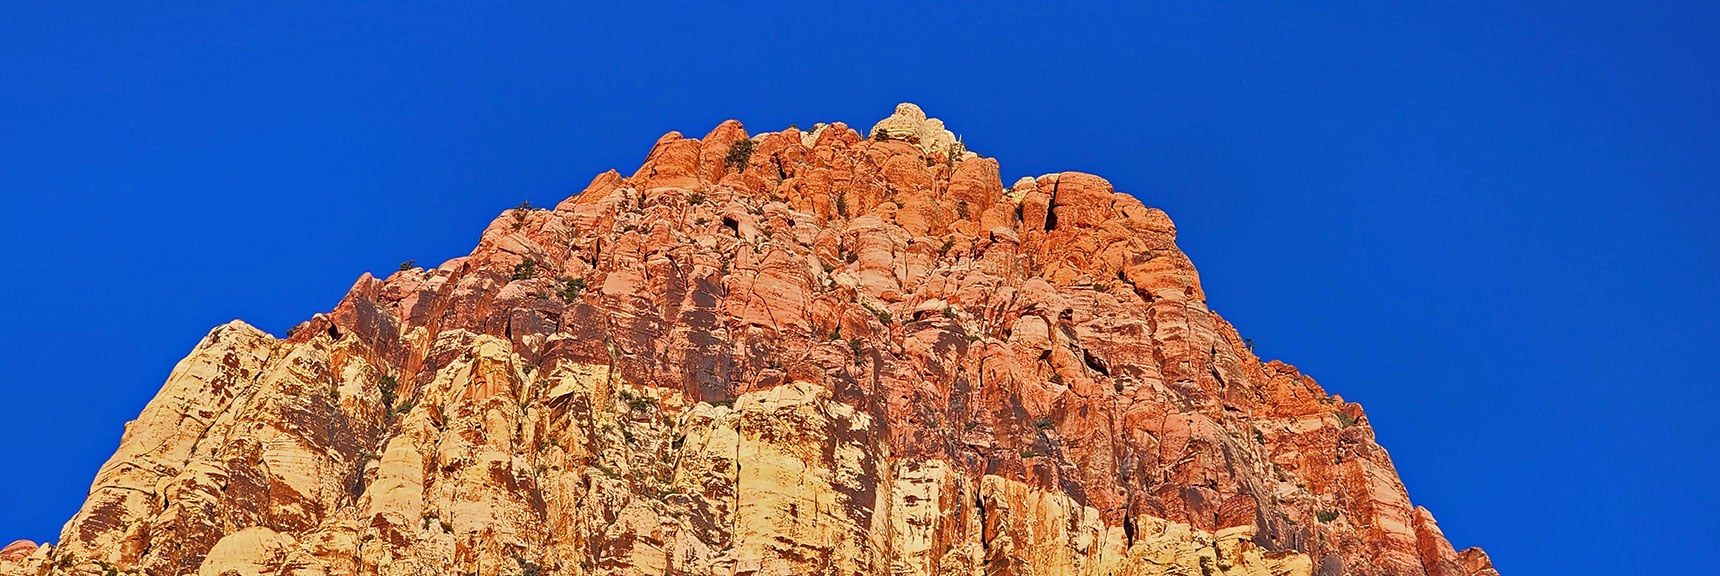 NE Summit Perspective of Rainbow Mountain | Knoll Trail | Red Rock Canyon National Conservation Area, Nevada | David Smith | LasVegasAreaTrails.com